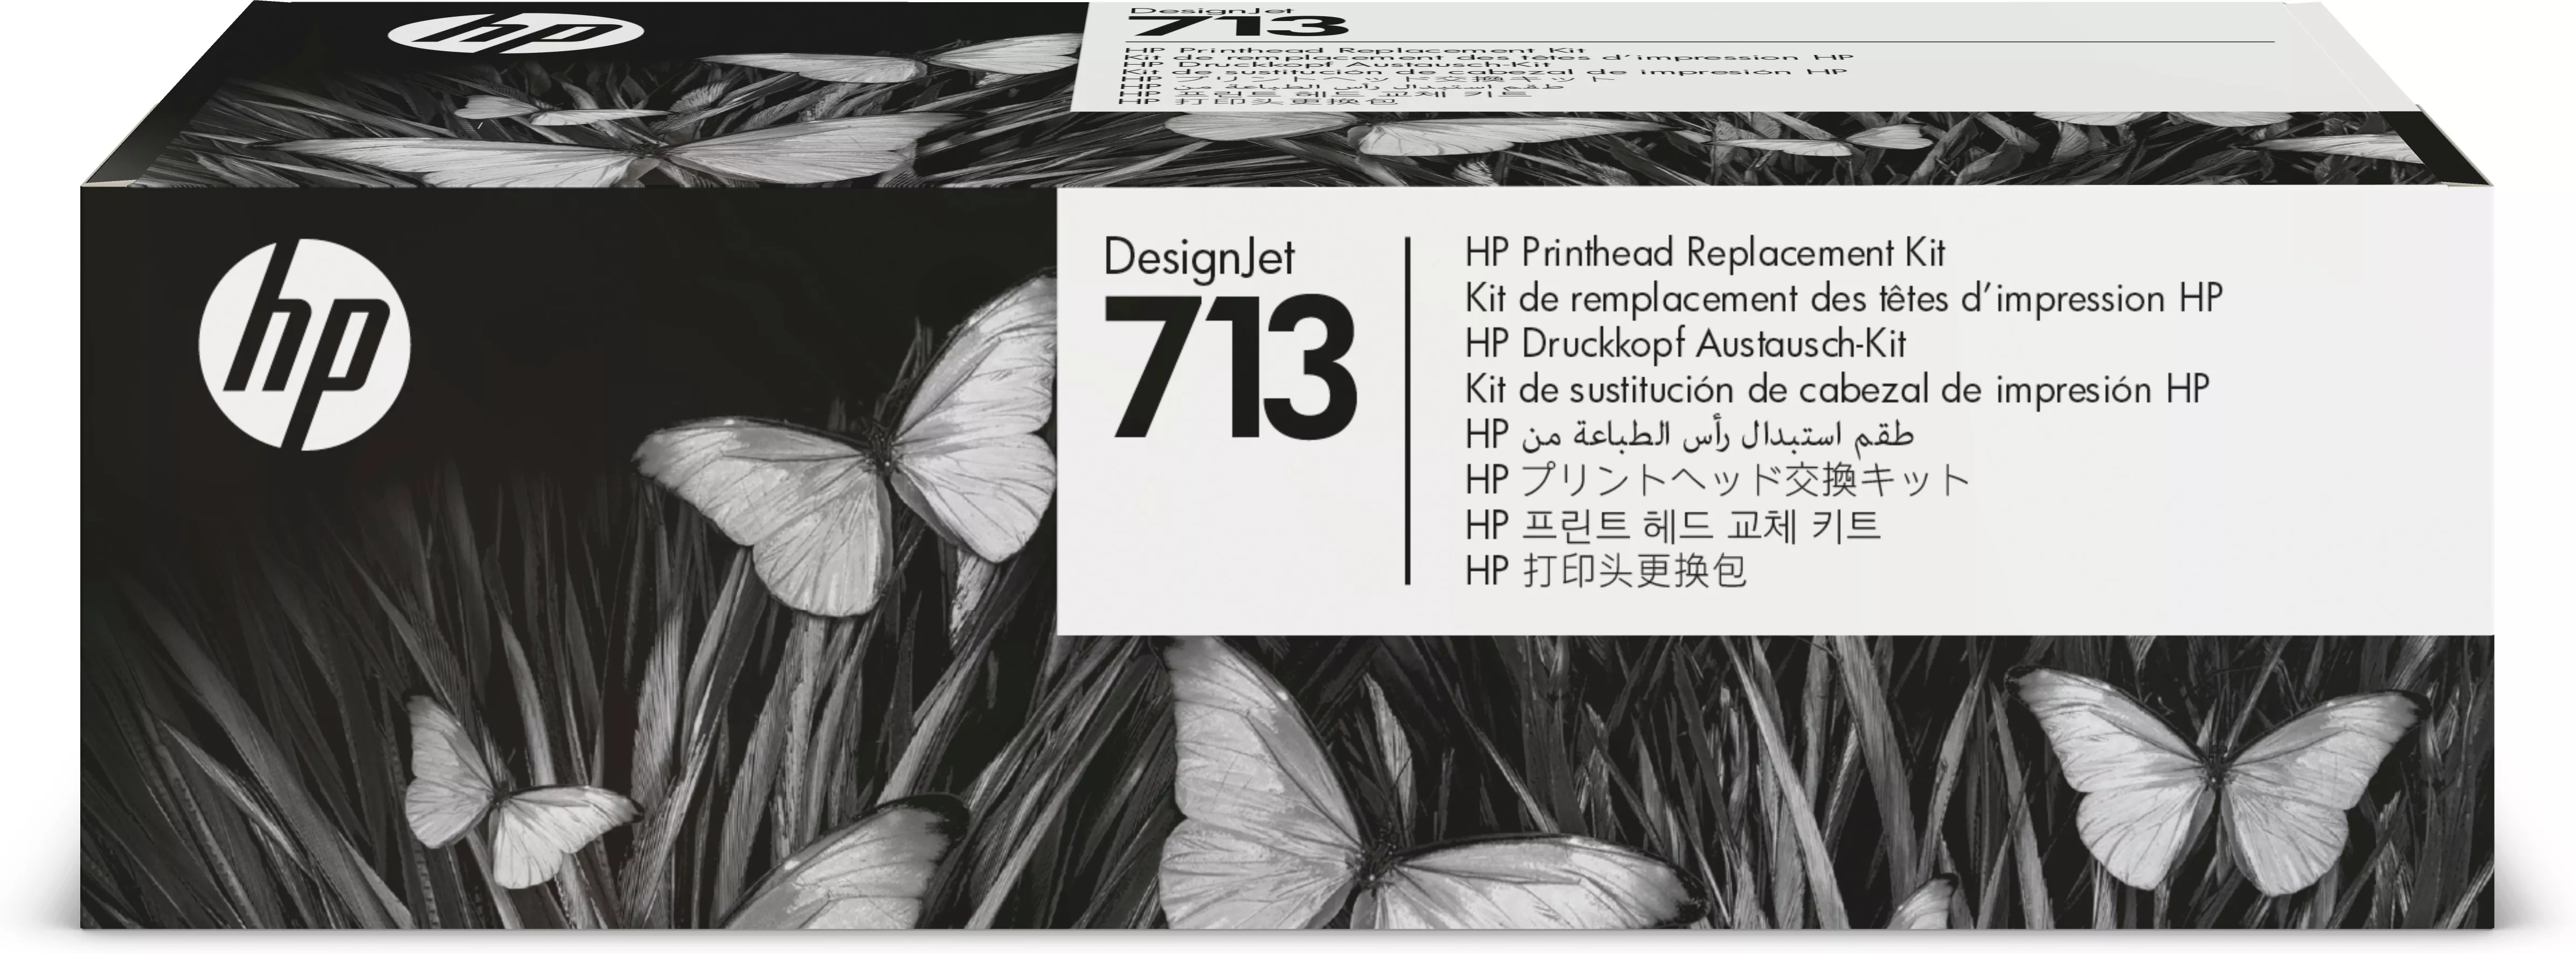 Vente Cartouches d'encre HP 713 Printhead Replacement Kit